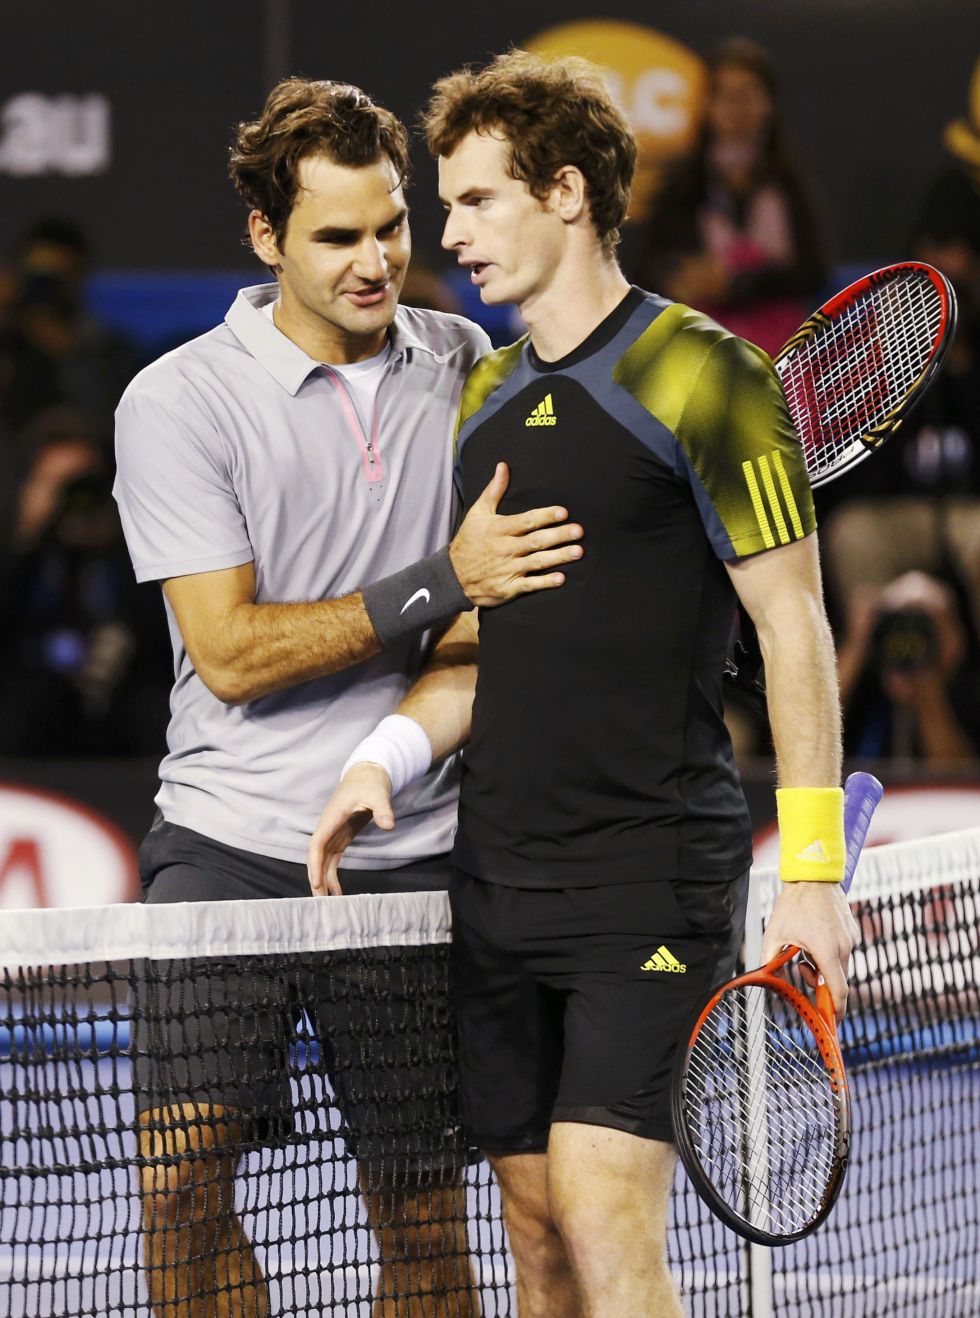 Final Andy Murray vs Novak Djokovic, como en el US Open